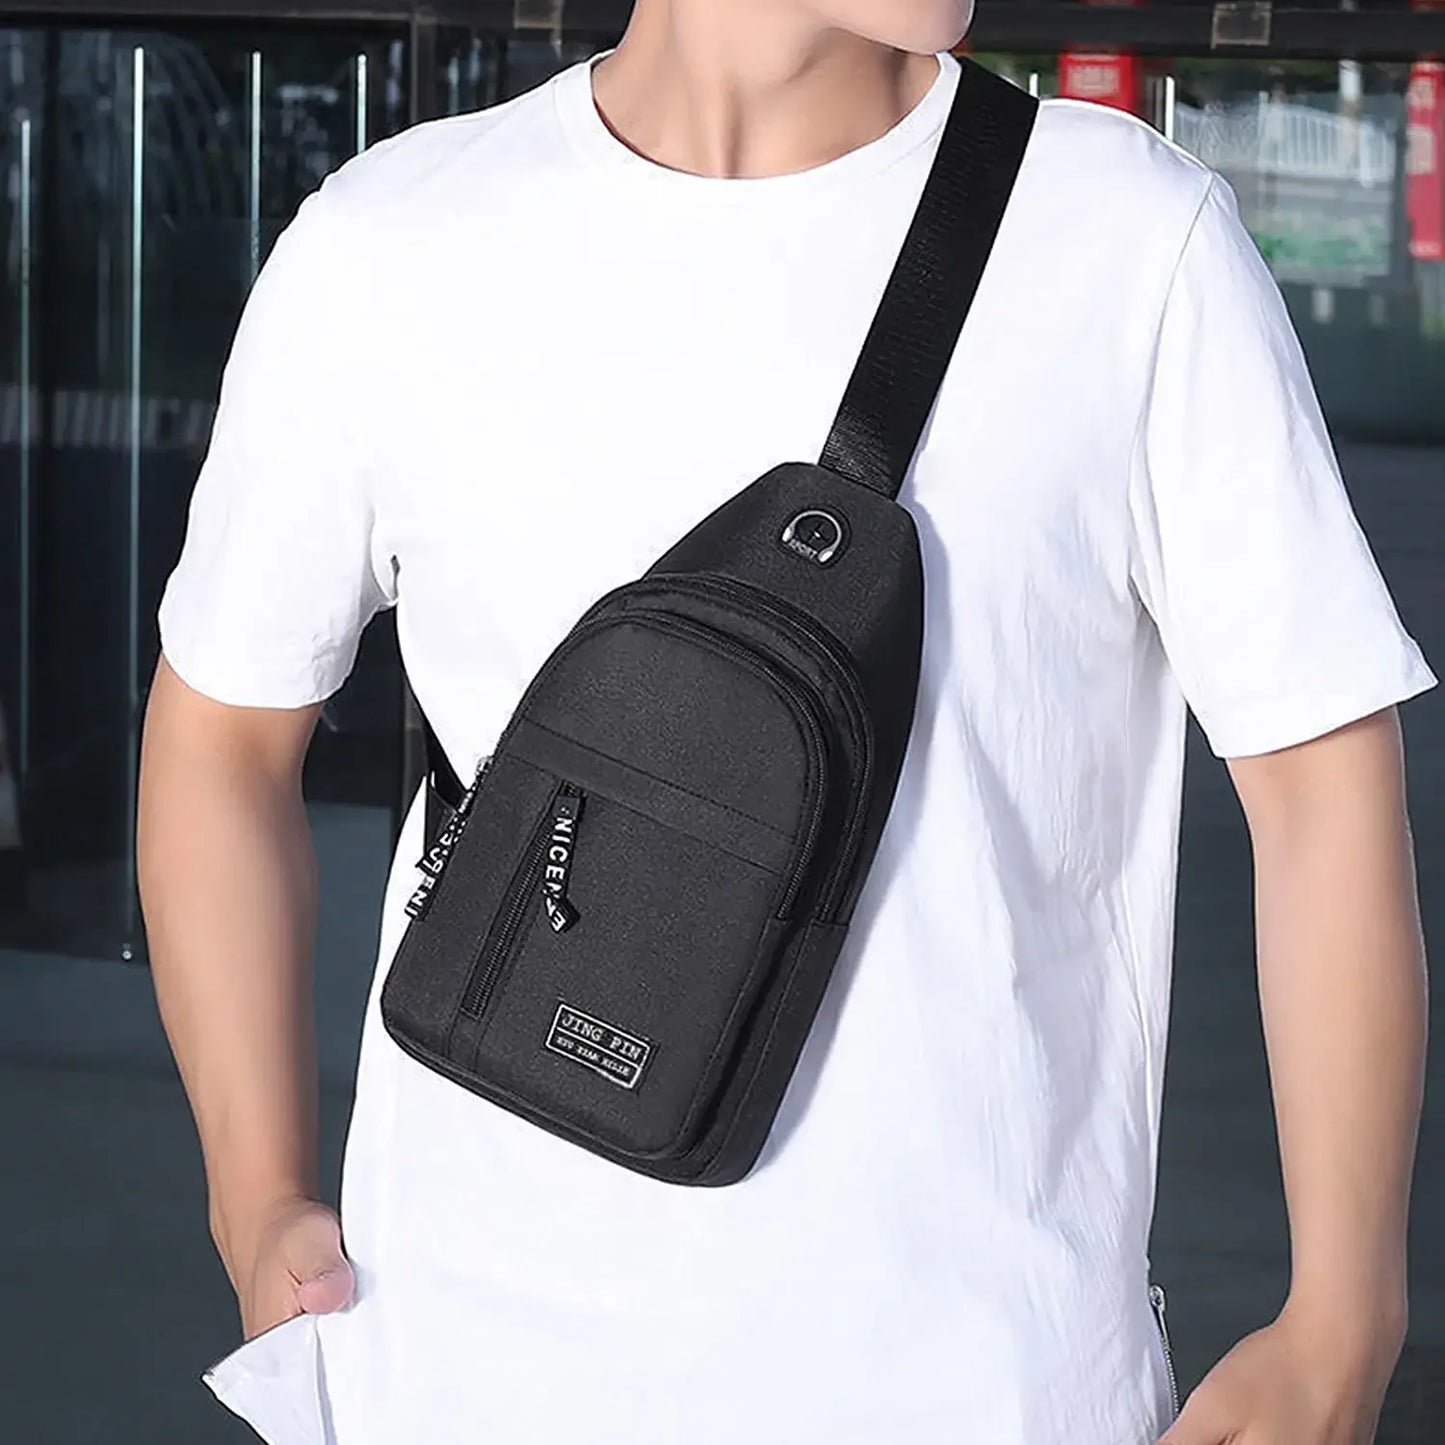 New Multi-functional Men Crossbody Bag Waterproof Shoulder Bag Travel Hiking Camping Sling Bag Pack Messenger Chest Bag For Male